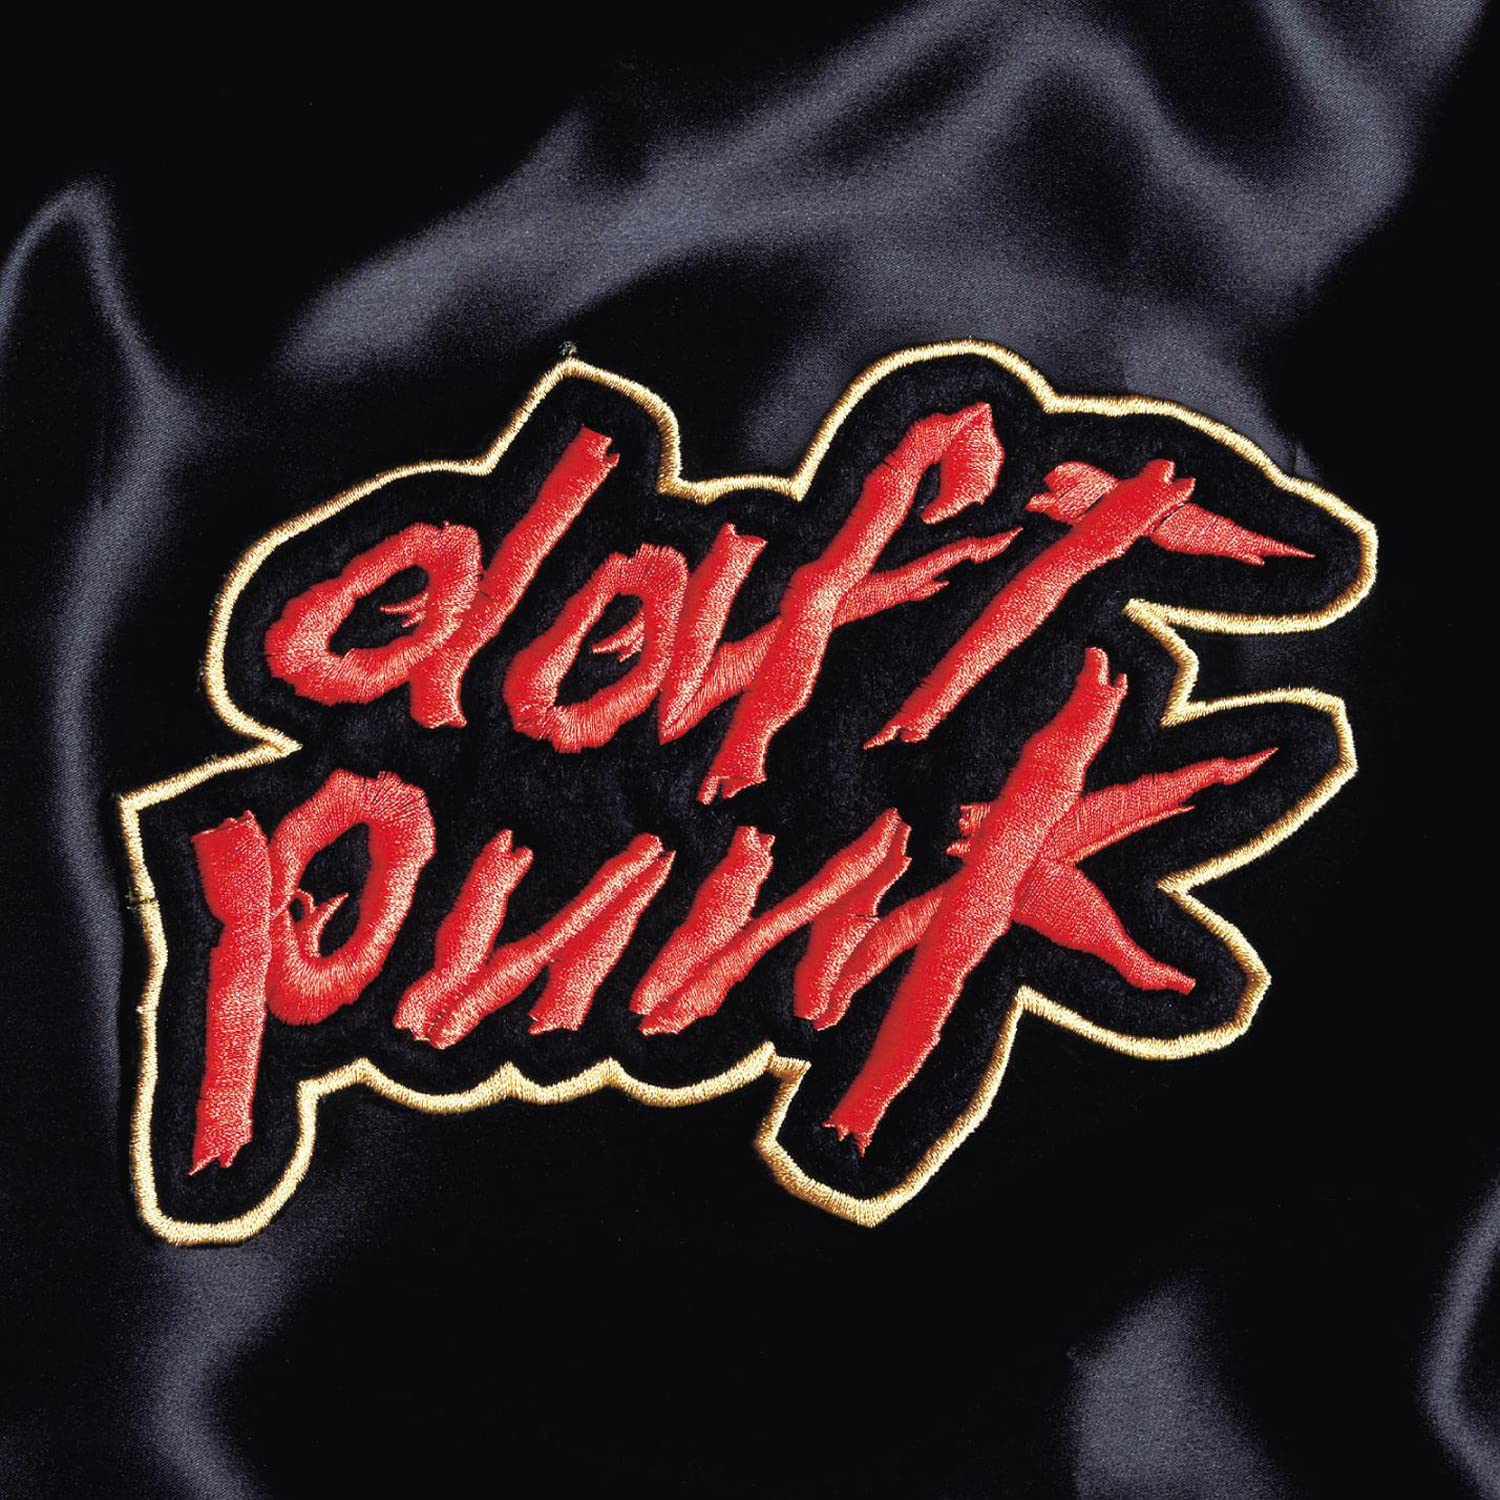 Daft Punk- Homework - Darkside Records